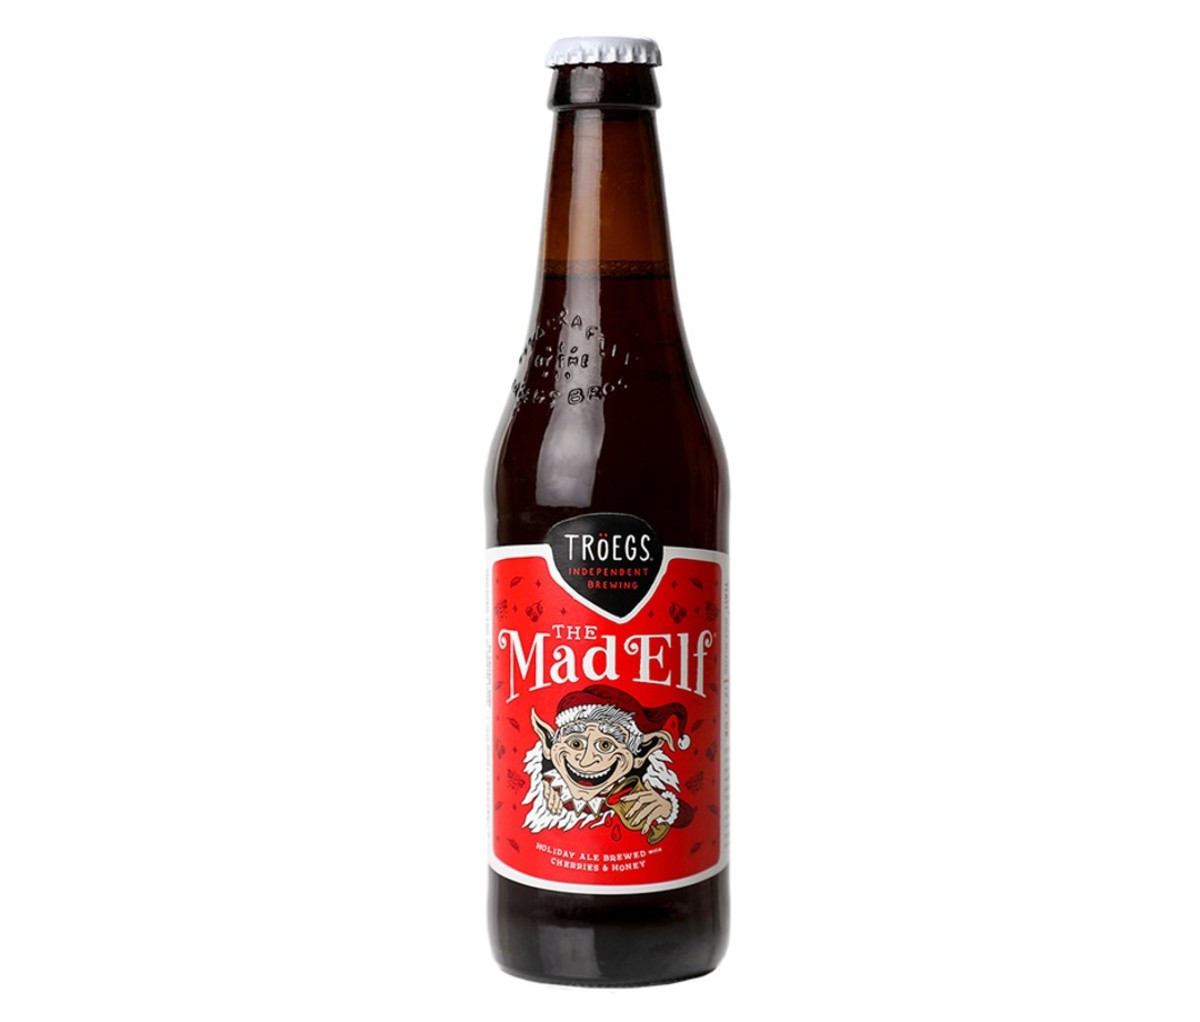 A bottle of Tröegs Mad Elf